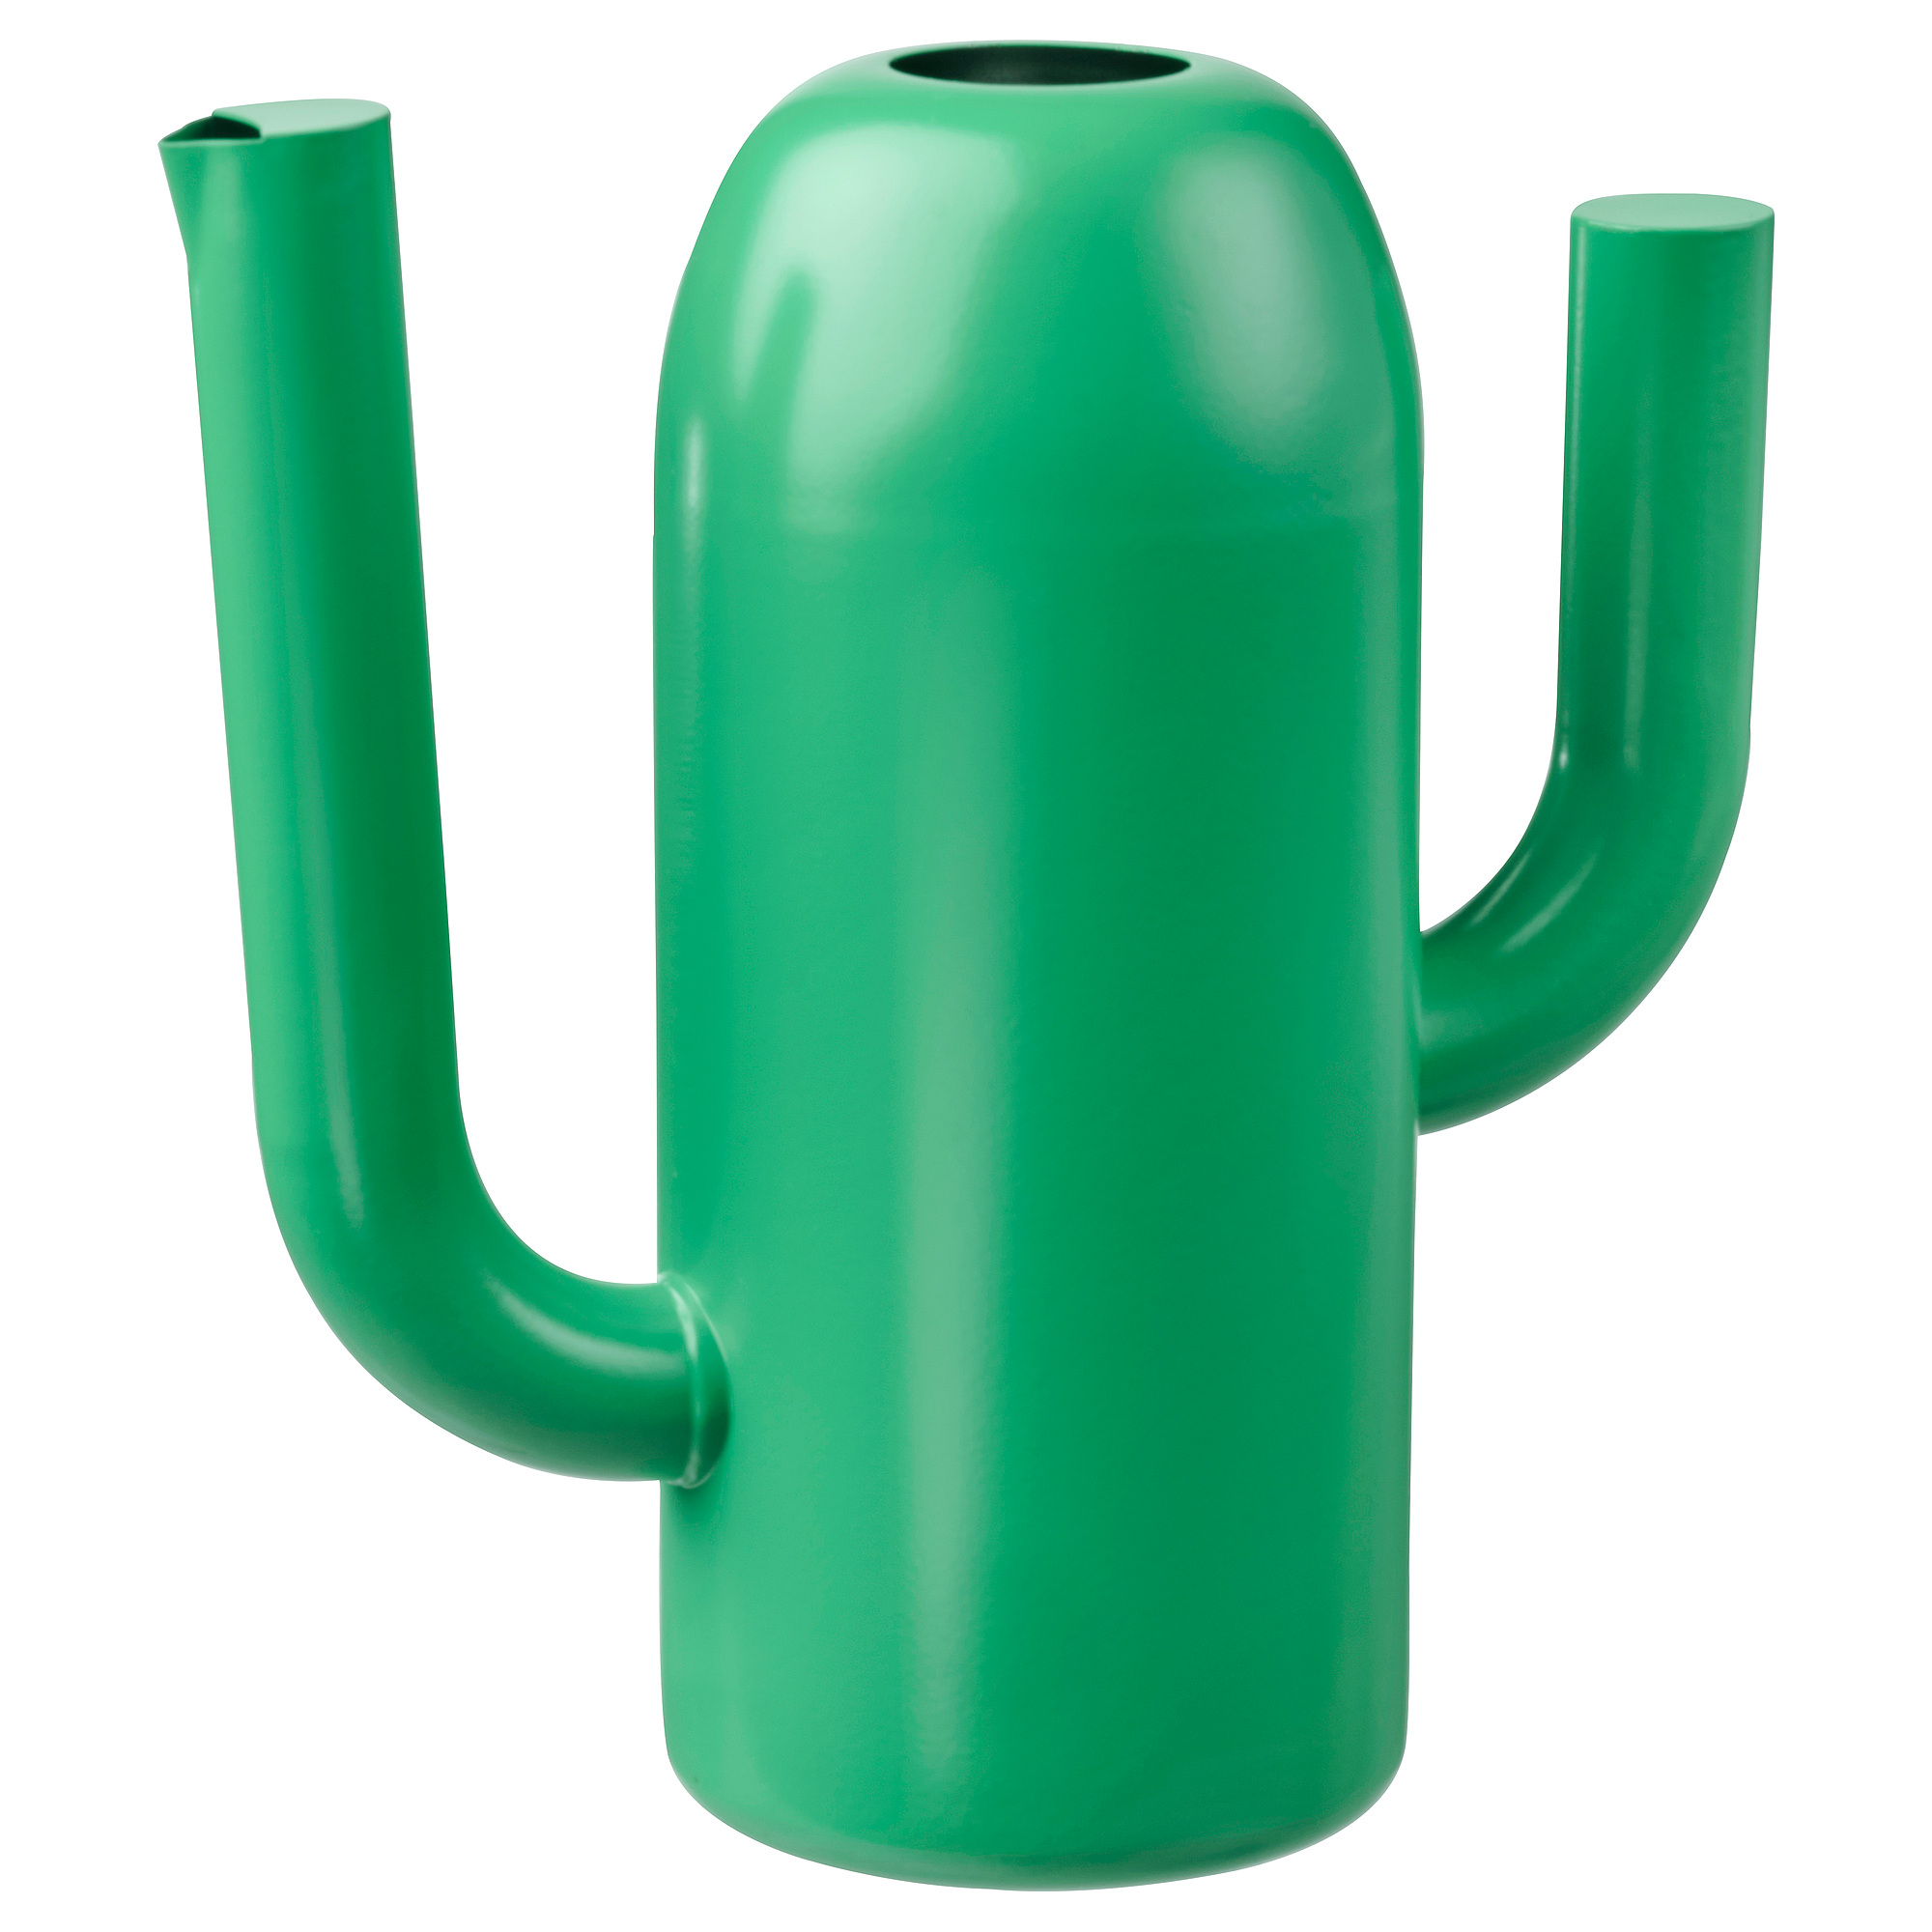 ÄRTBUSKE - 花瓶/澆水壺, 鮮綠色| IKEA 香港及澳門